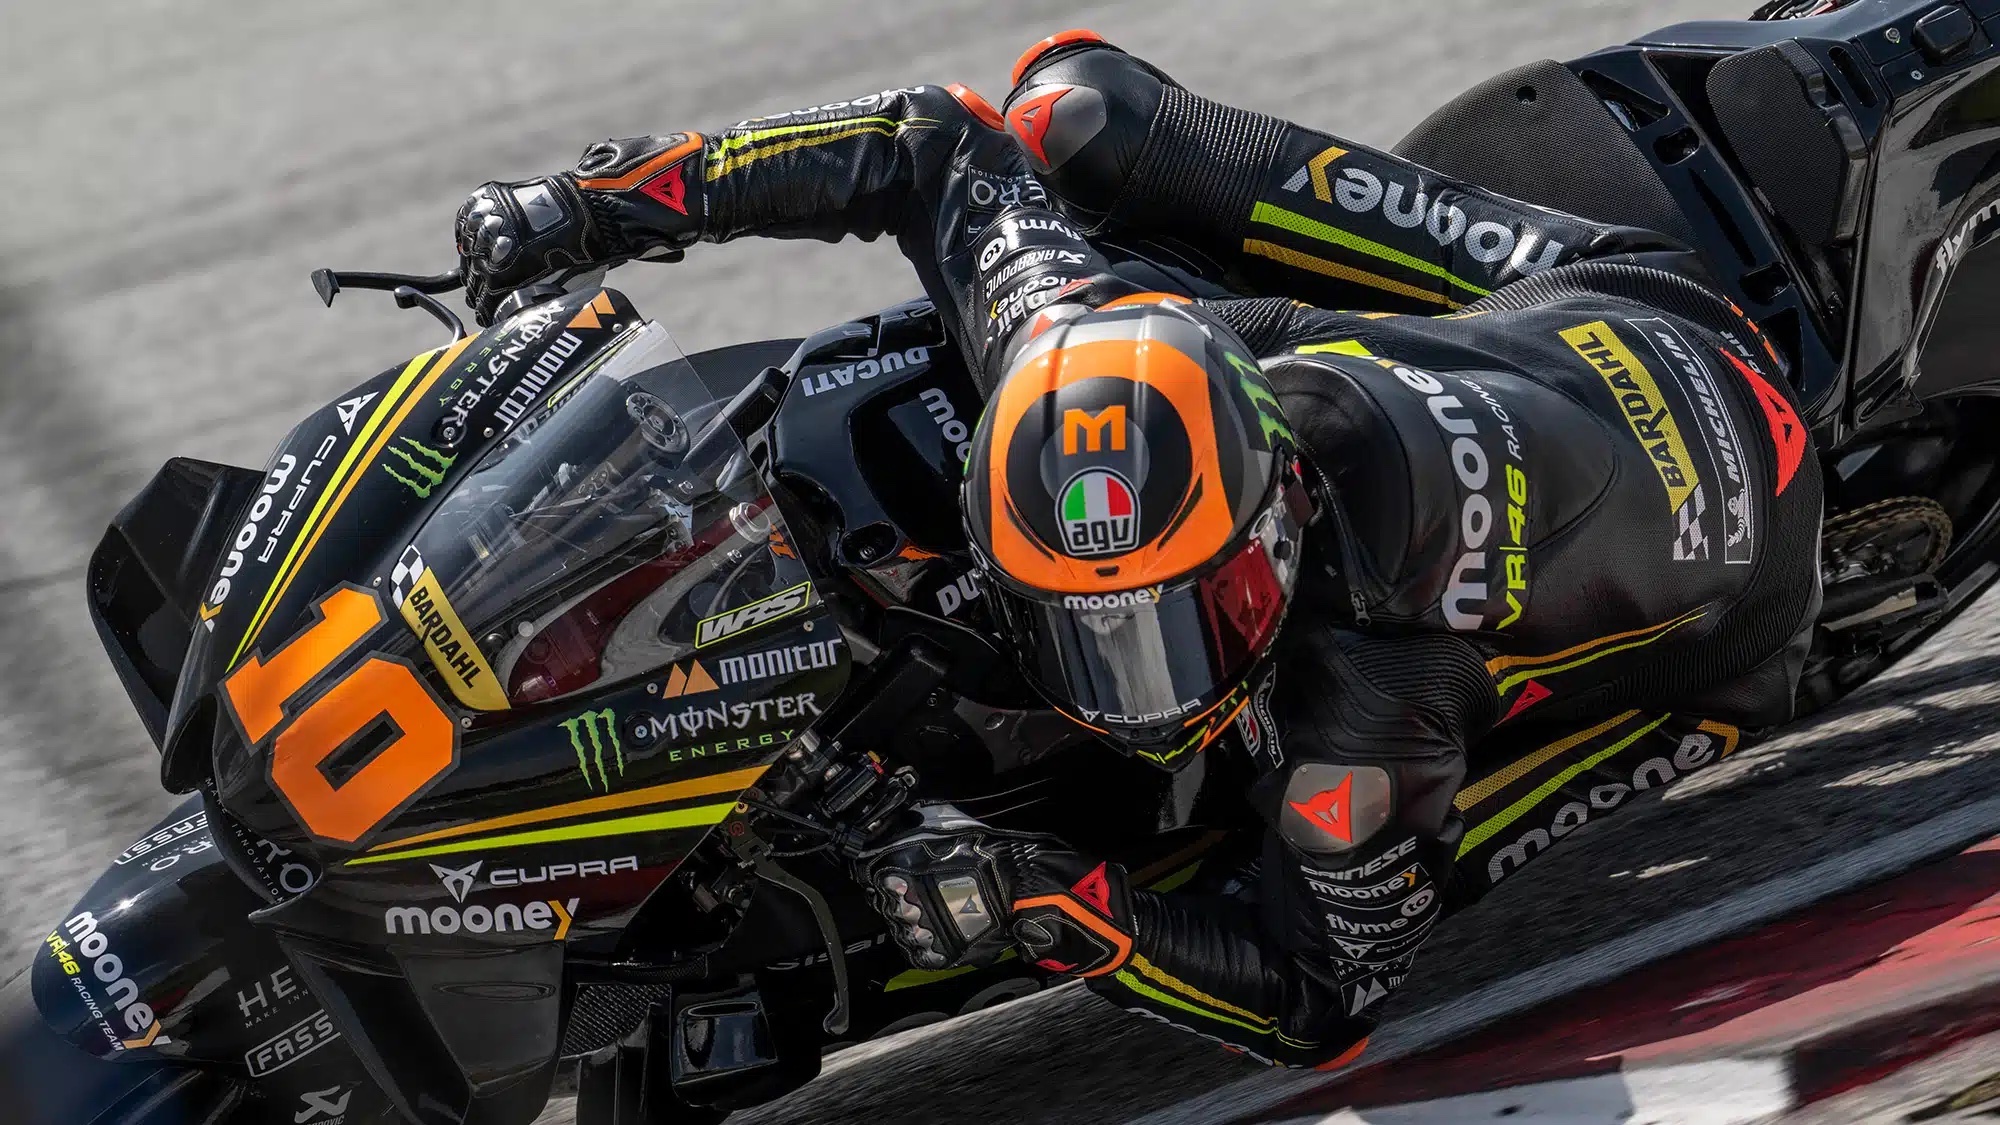 #10, MotoGP's Luca Marini. Media sourced from Motor Sport Magazine.